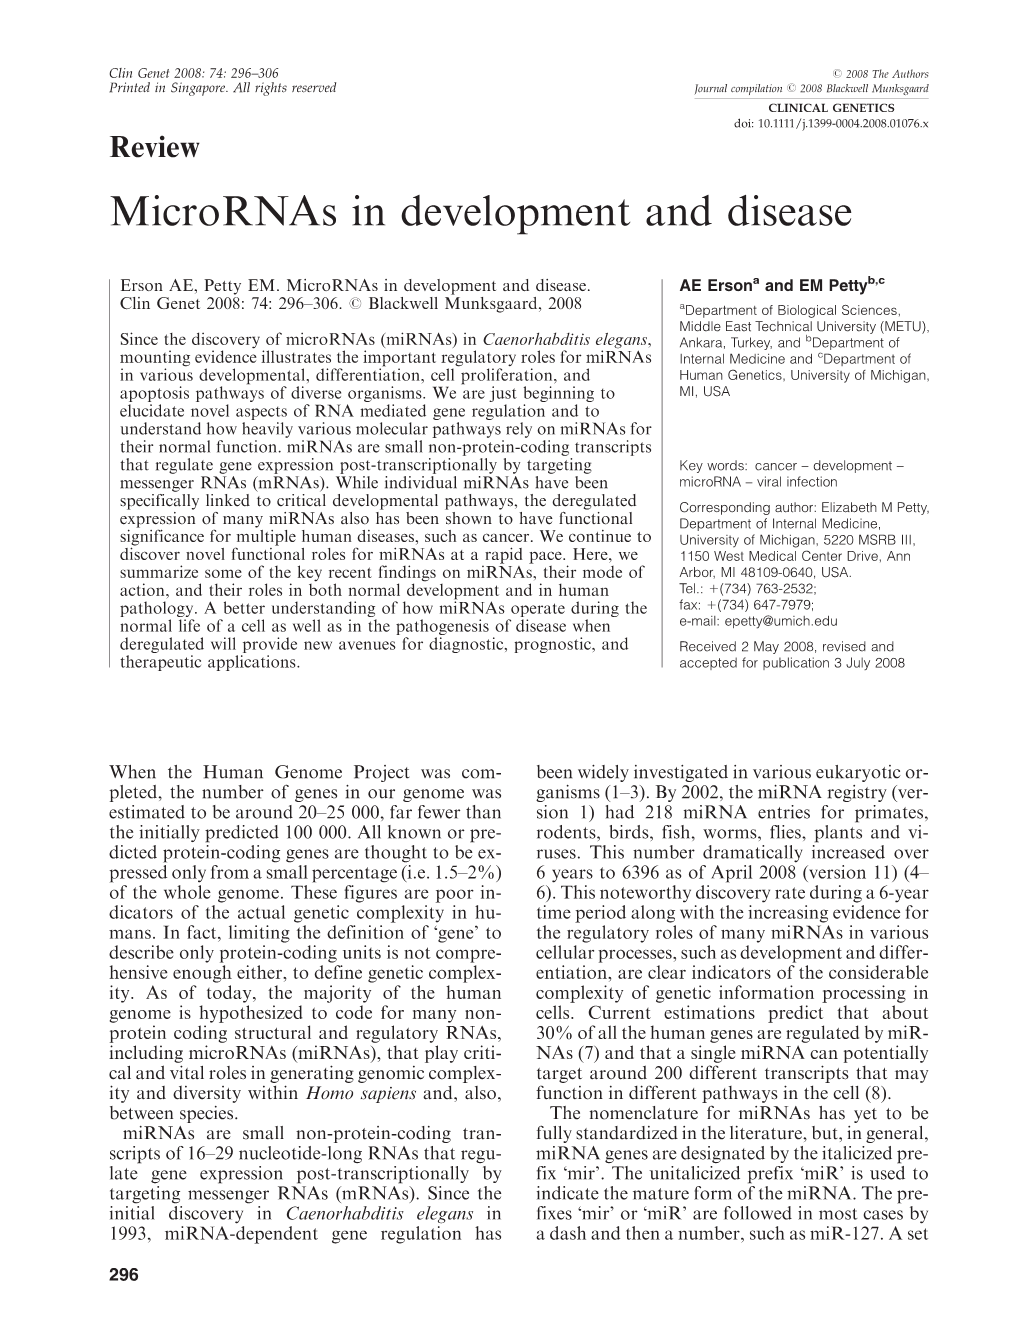 Micrornas in Development and Disease